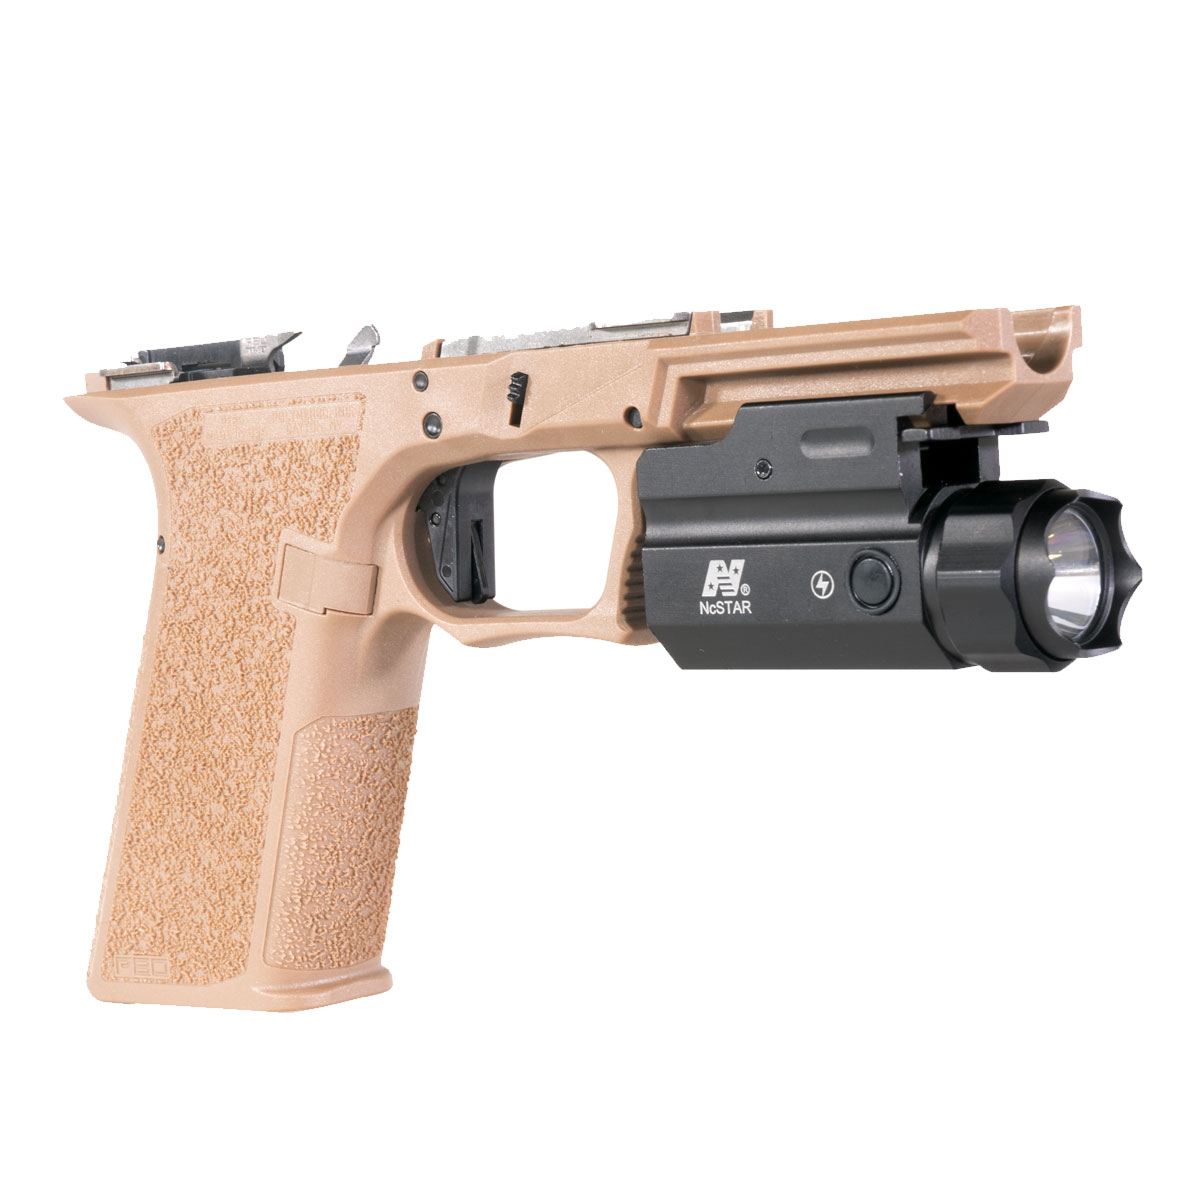 DIY Pistol Kits: Polymer80 PFS9 Full Size Serialized Frame + NcSTAR Quick-Release Mount Pistol Flashlight